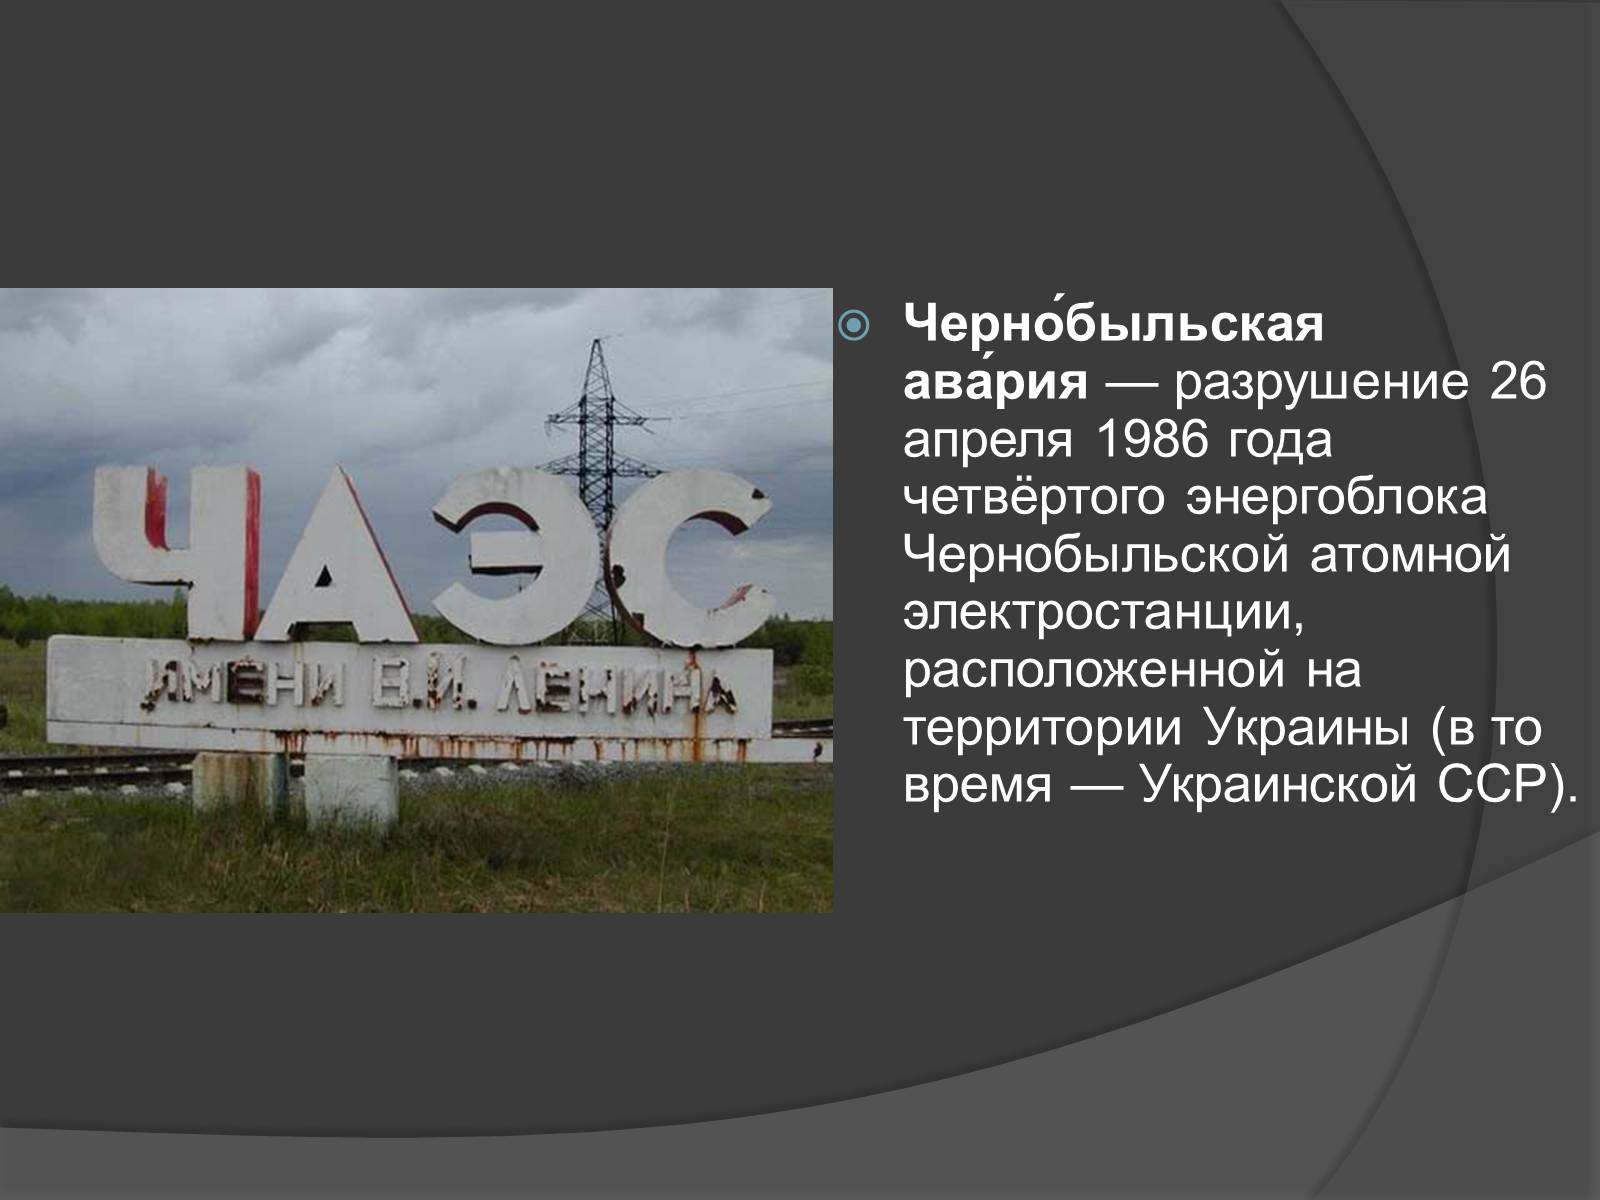 Презентація на тему «Чернобыльская авария» - Слайд #2